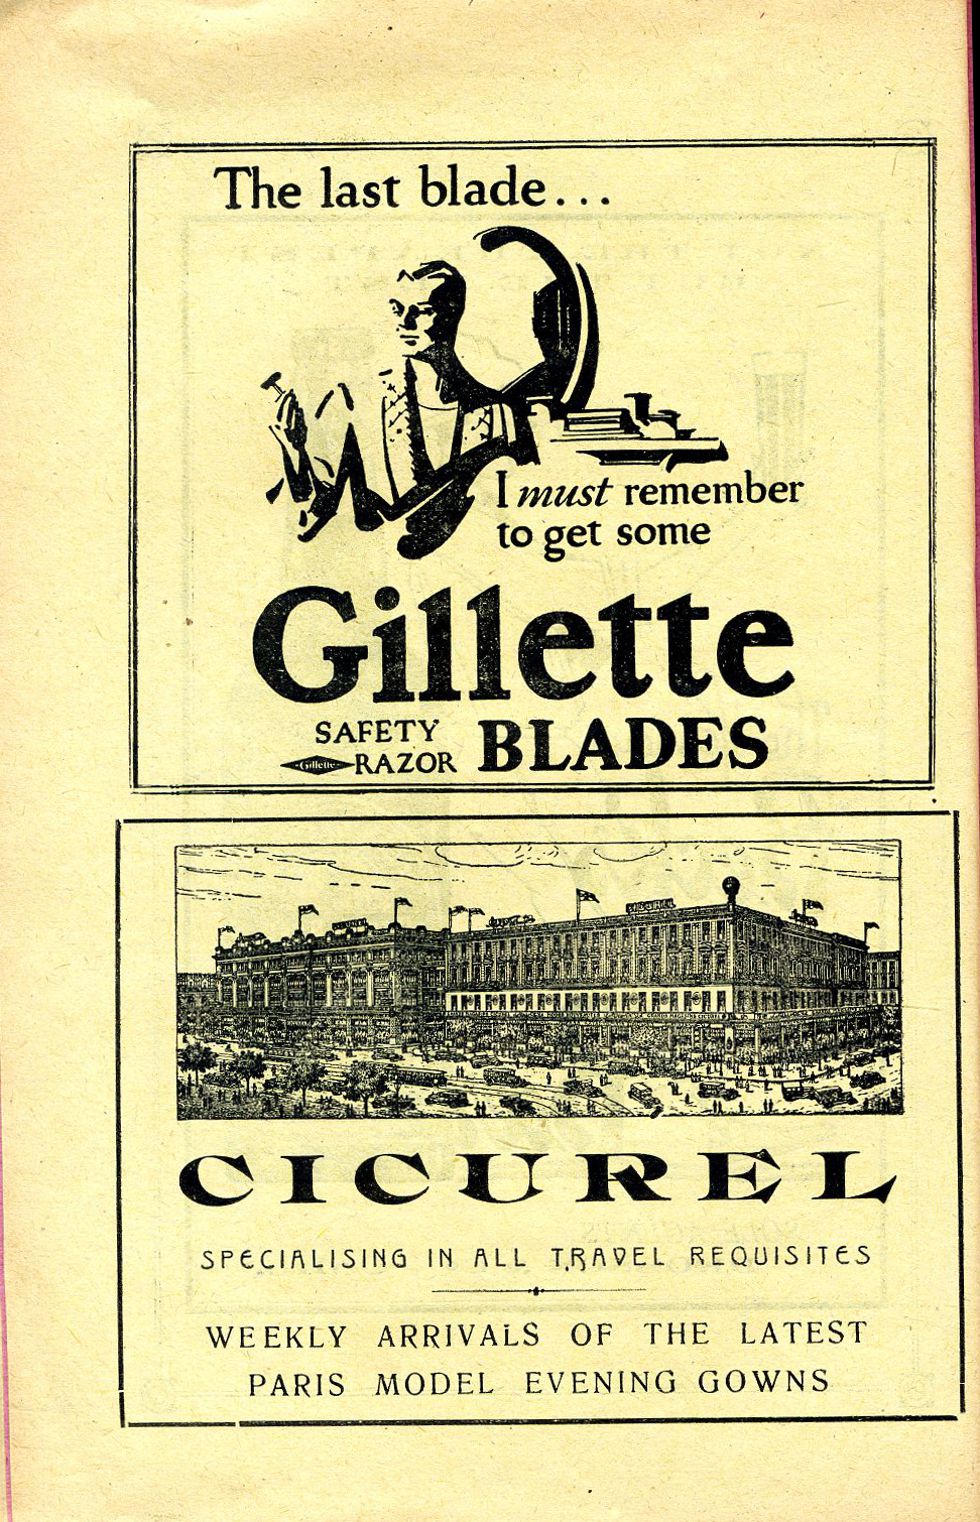 Gillette and Cicurel advertisement